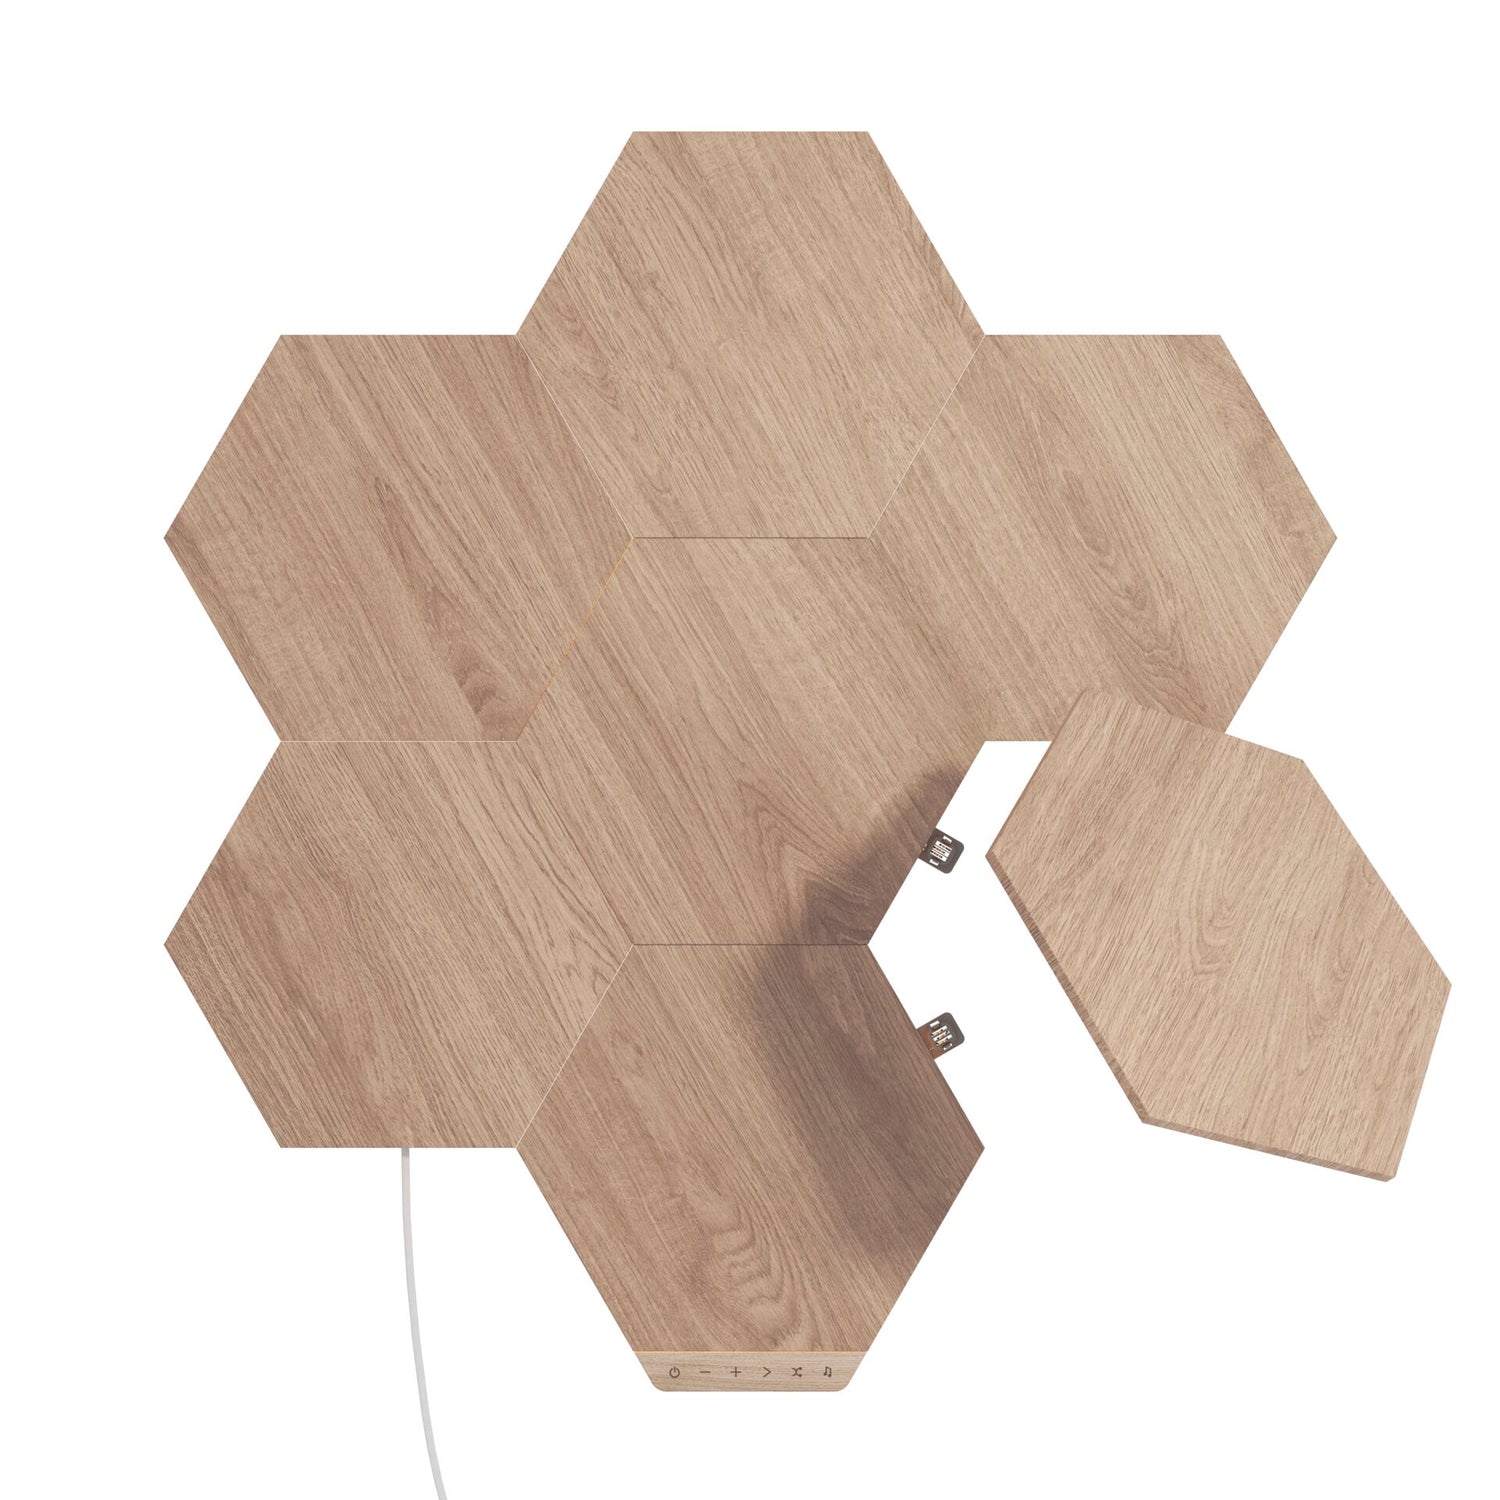 Nanoleaf Elements Hexagon Wood